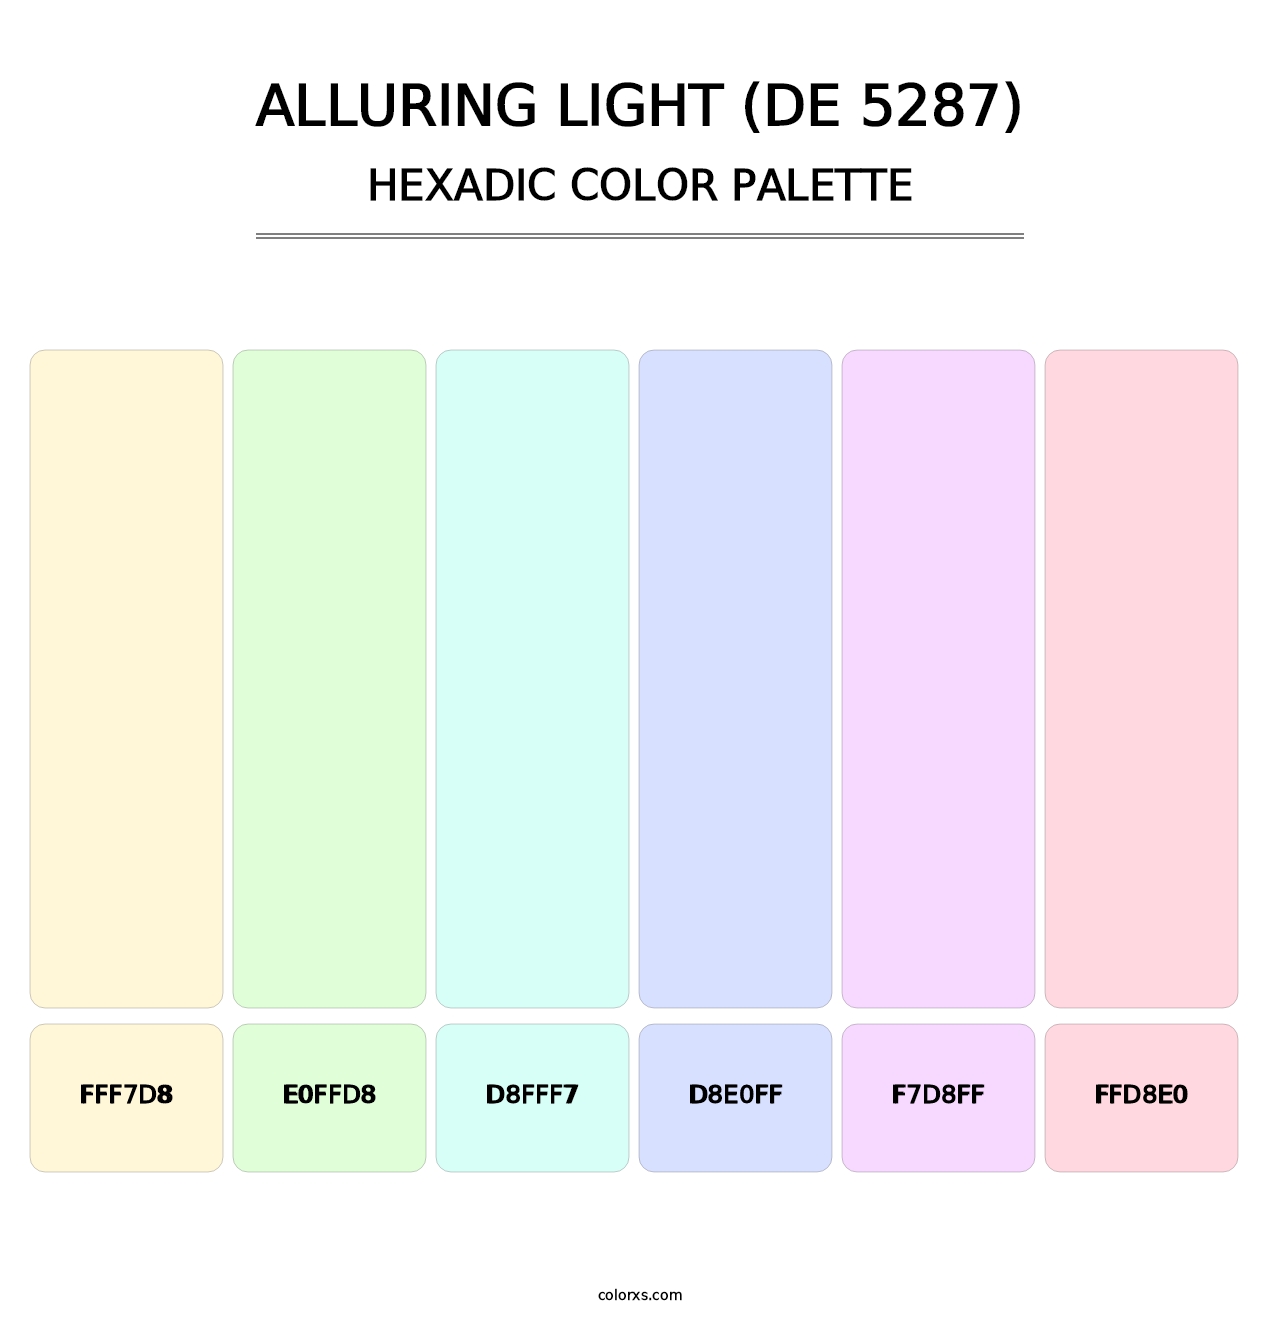 Alluring Light (DE 5287) - Hexadic Color Palette